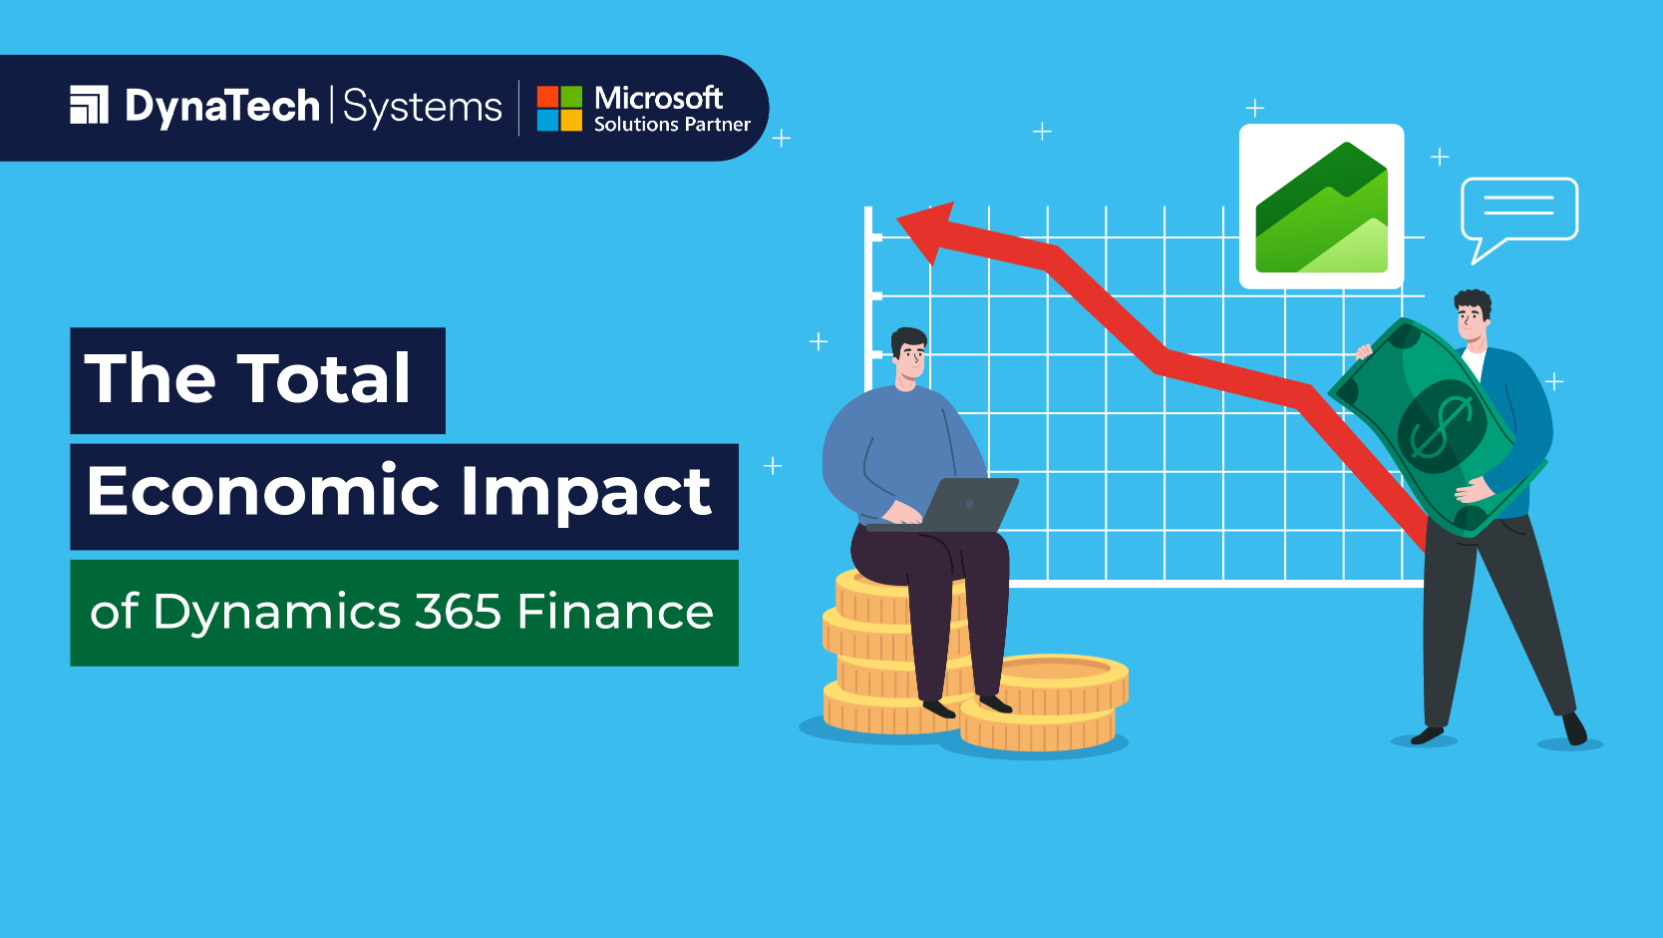 The Total Economic Impact of Dynamics 365 Finance